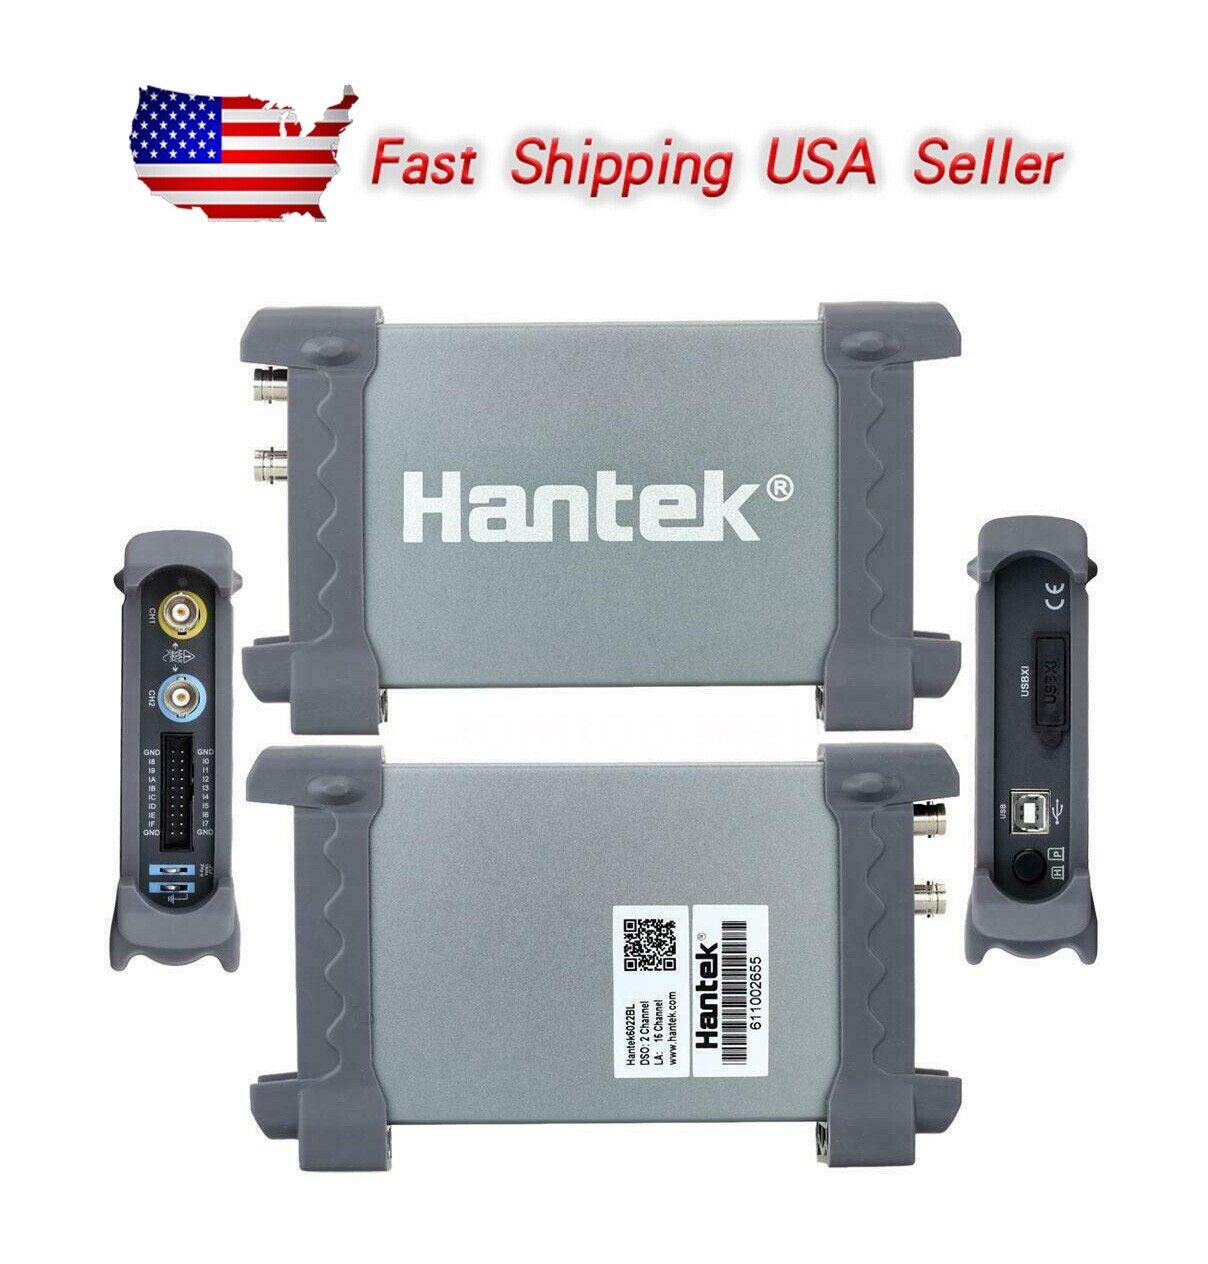 US Hantek 6022BL Digital Portable Oscilloscope 48MS/s 20MHz Bandwidth